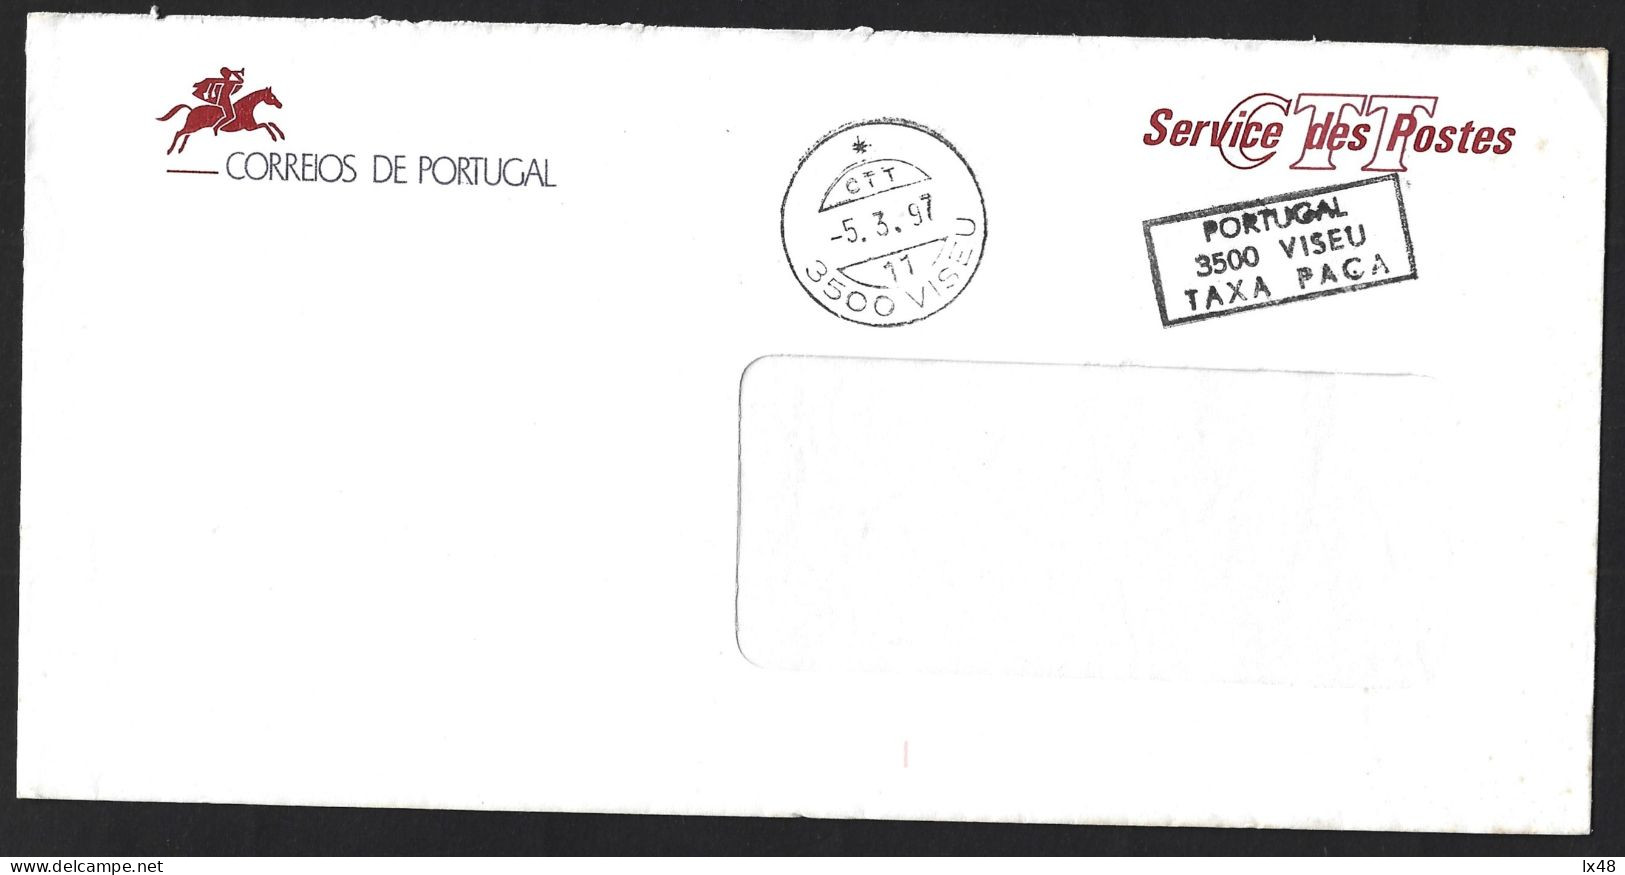 Carta Dos Correios Com Marcas De 'Taxa Paga, Viseu'. Rare. Letter From The Post Office Marked 'Tax Paid, Viseu'. Rare. - Storia Postale